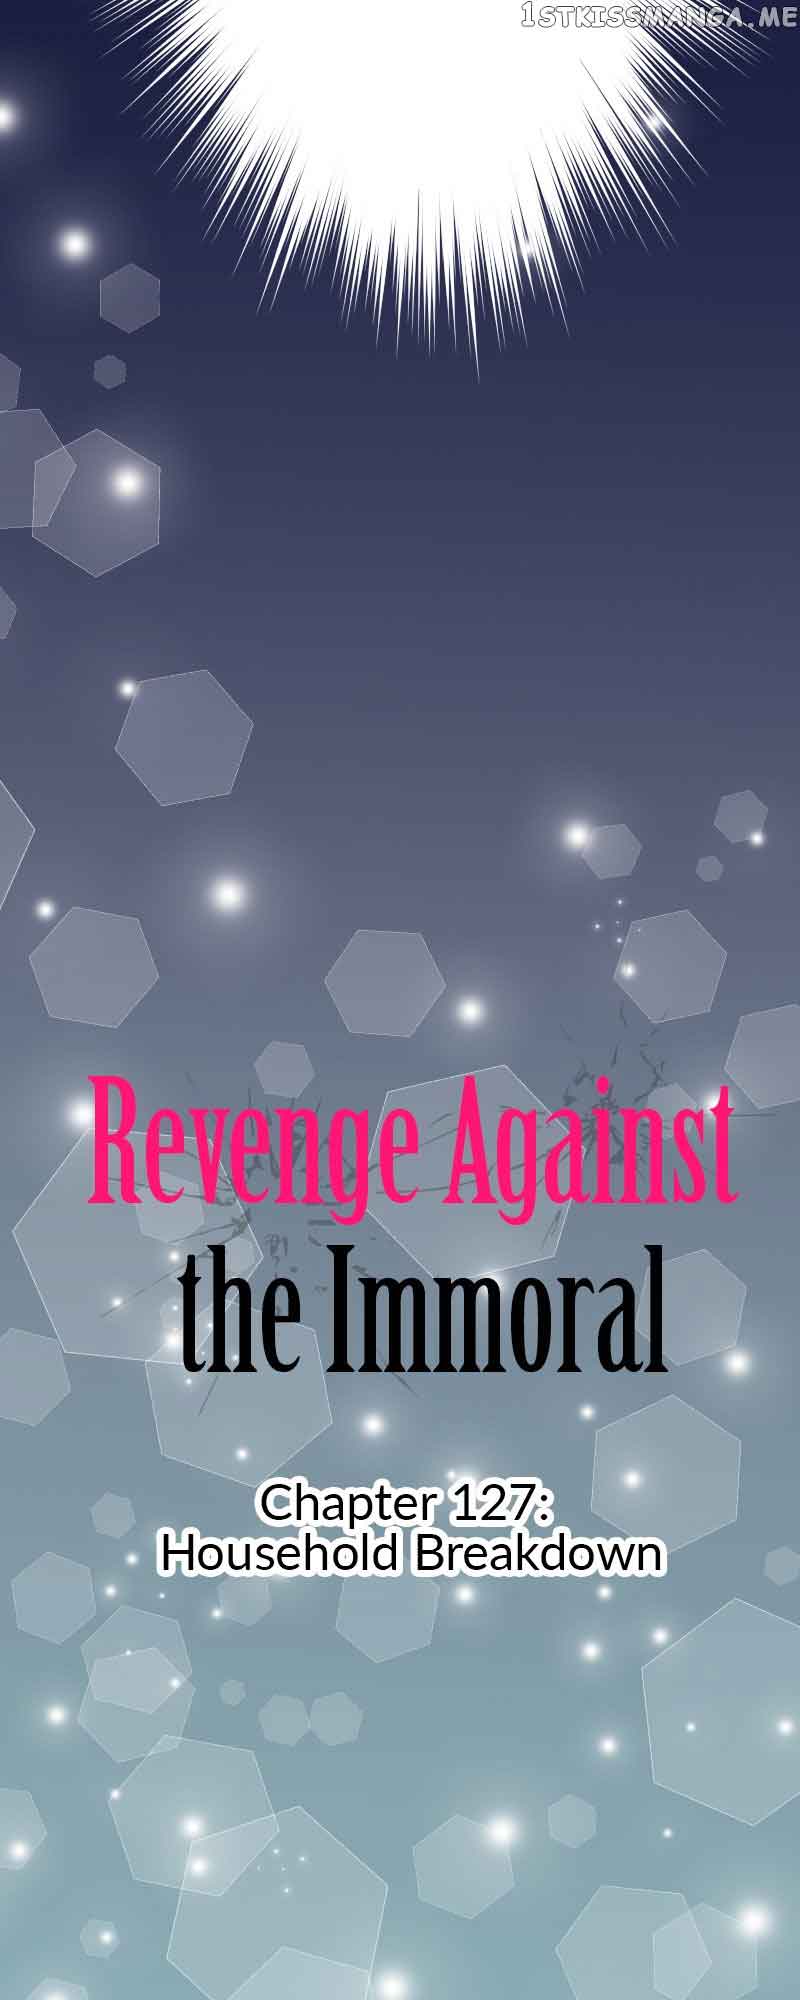 Revenge Against the Immoral chapter 127